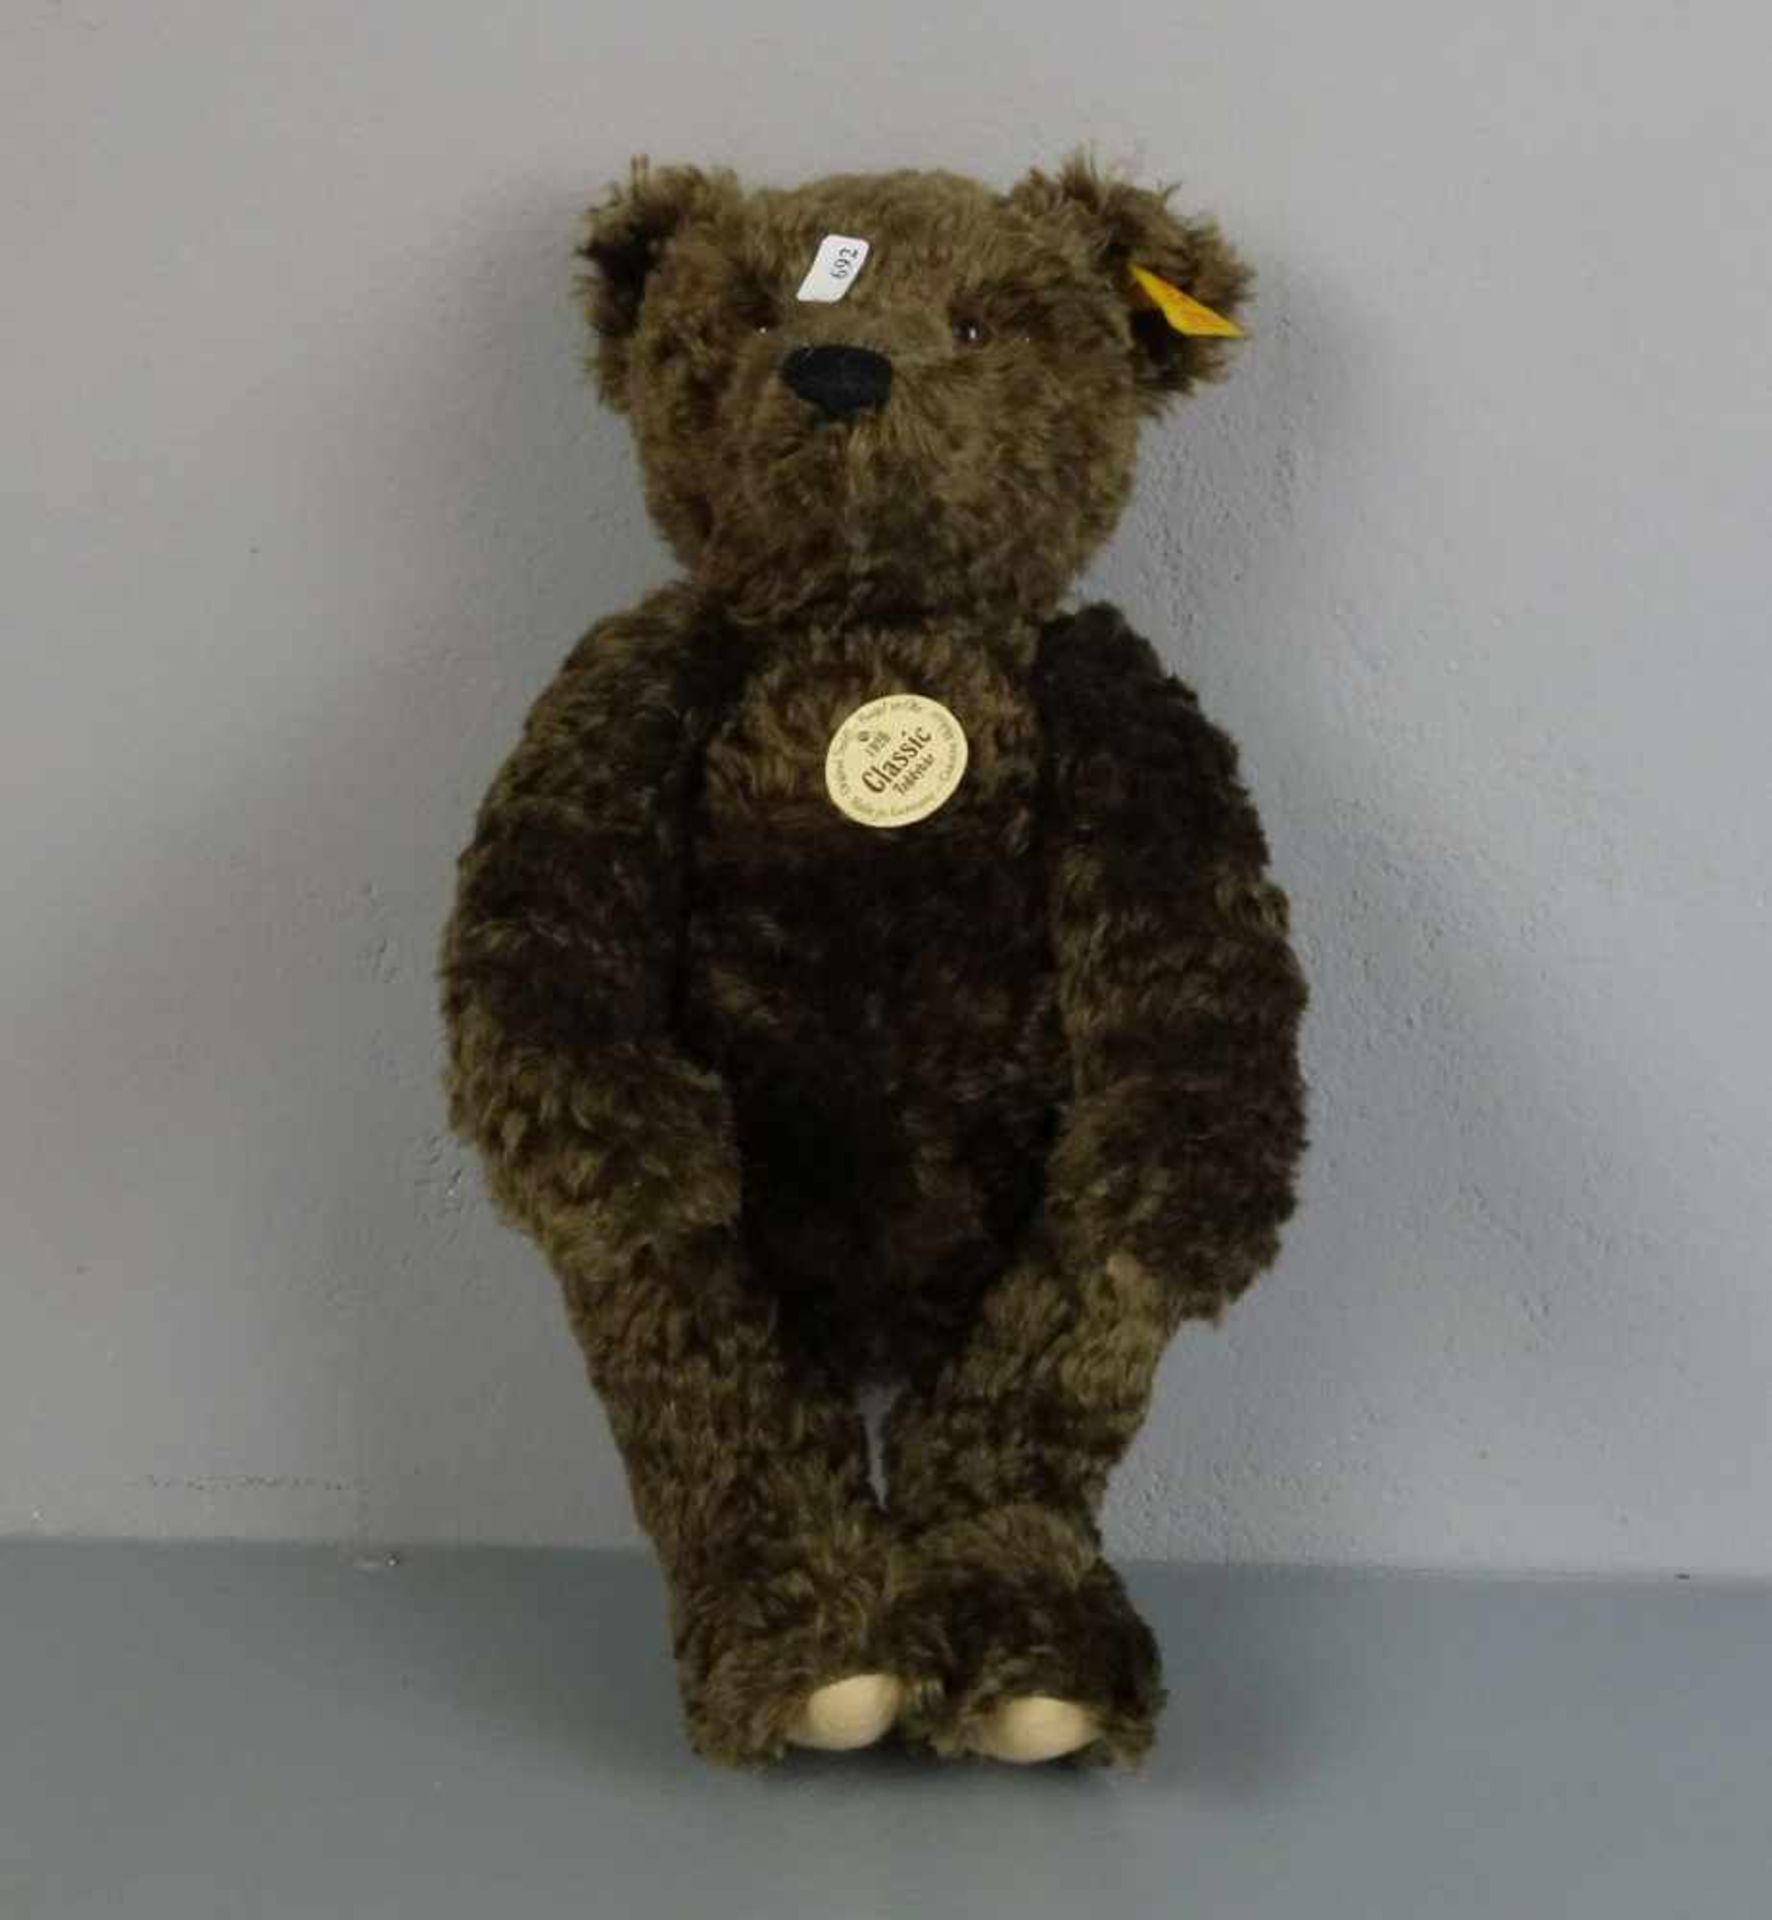 PLÜSCHTIER / TEDDYBÄR - "Classic Teddybär 1920" / teddy bear, 2. H. 20. Jh., Mohair und Filz;